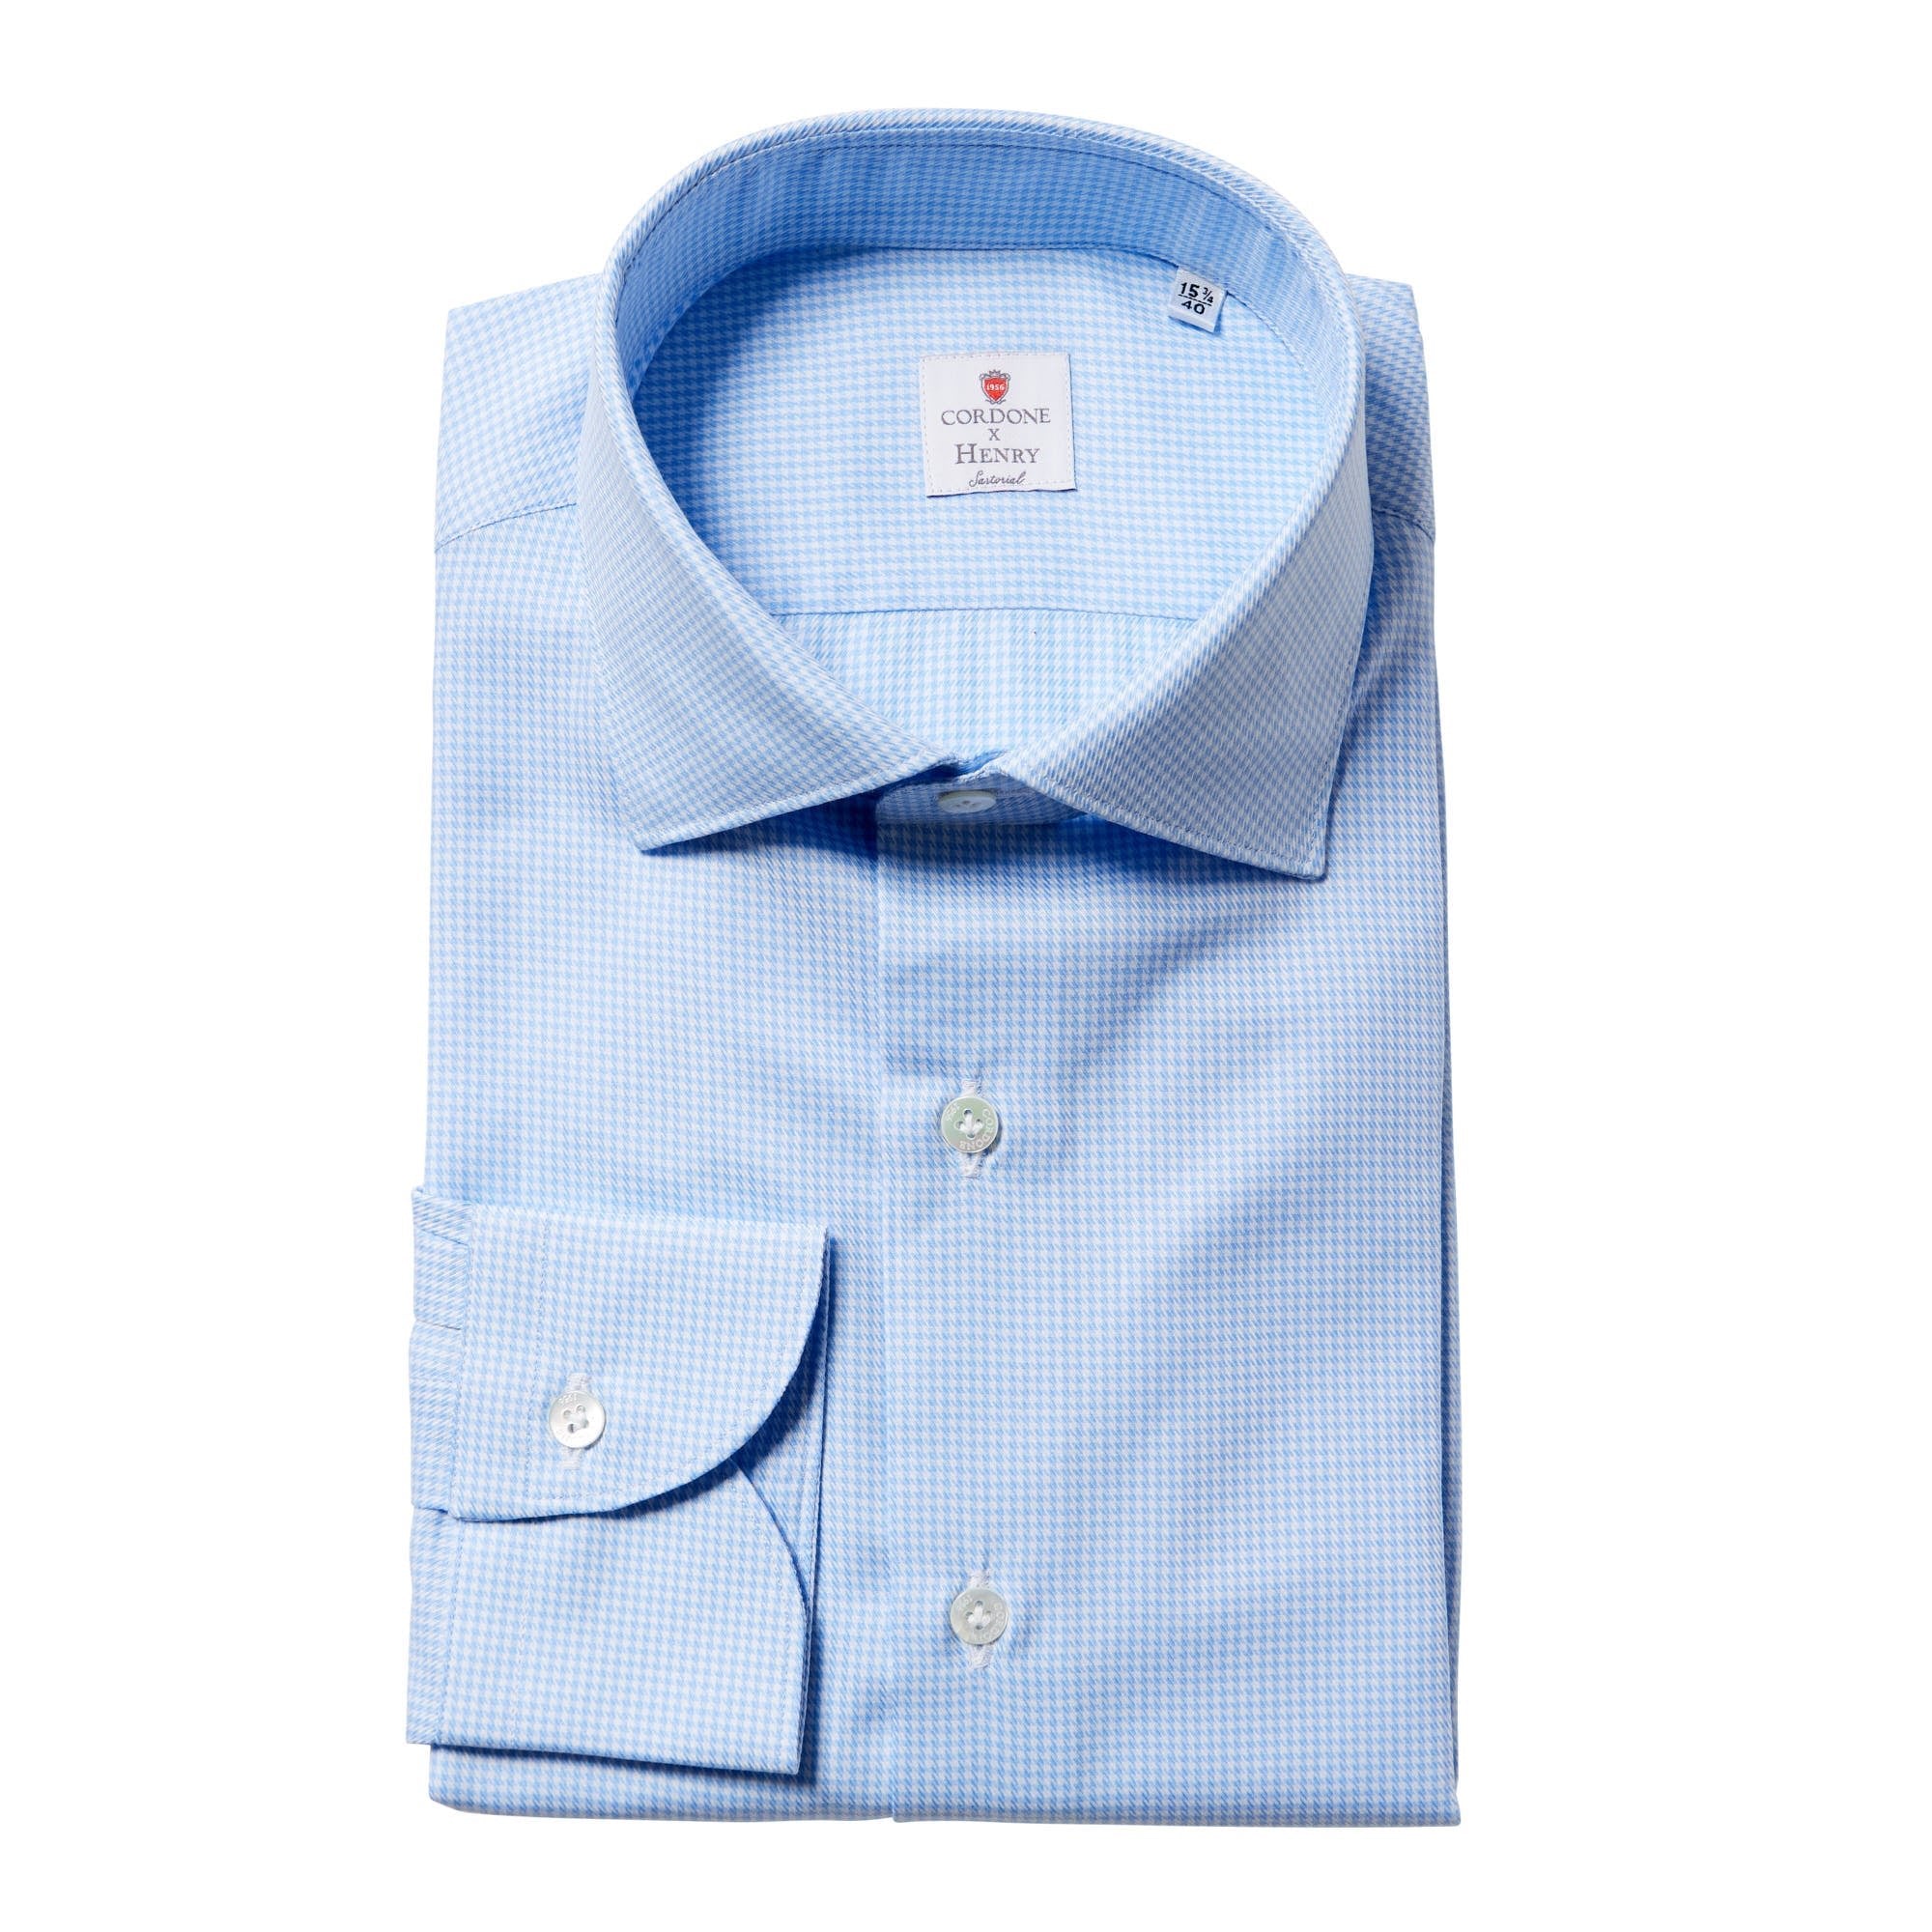 CORDONE Houndstooth Long Sleeve Single Cuff Shirt BLUE/WHITE - Henry BucksShirts38AW240080 - BLWT - SC - 39